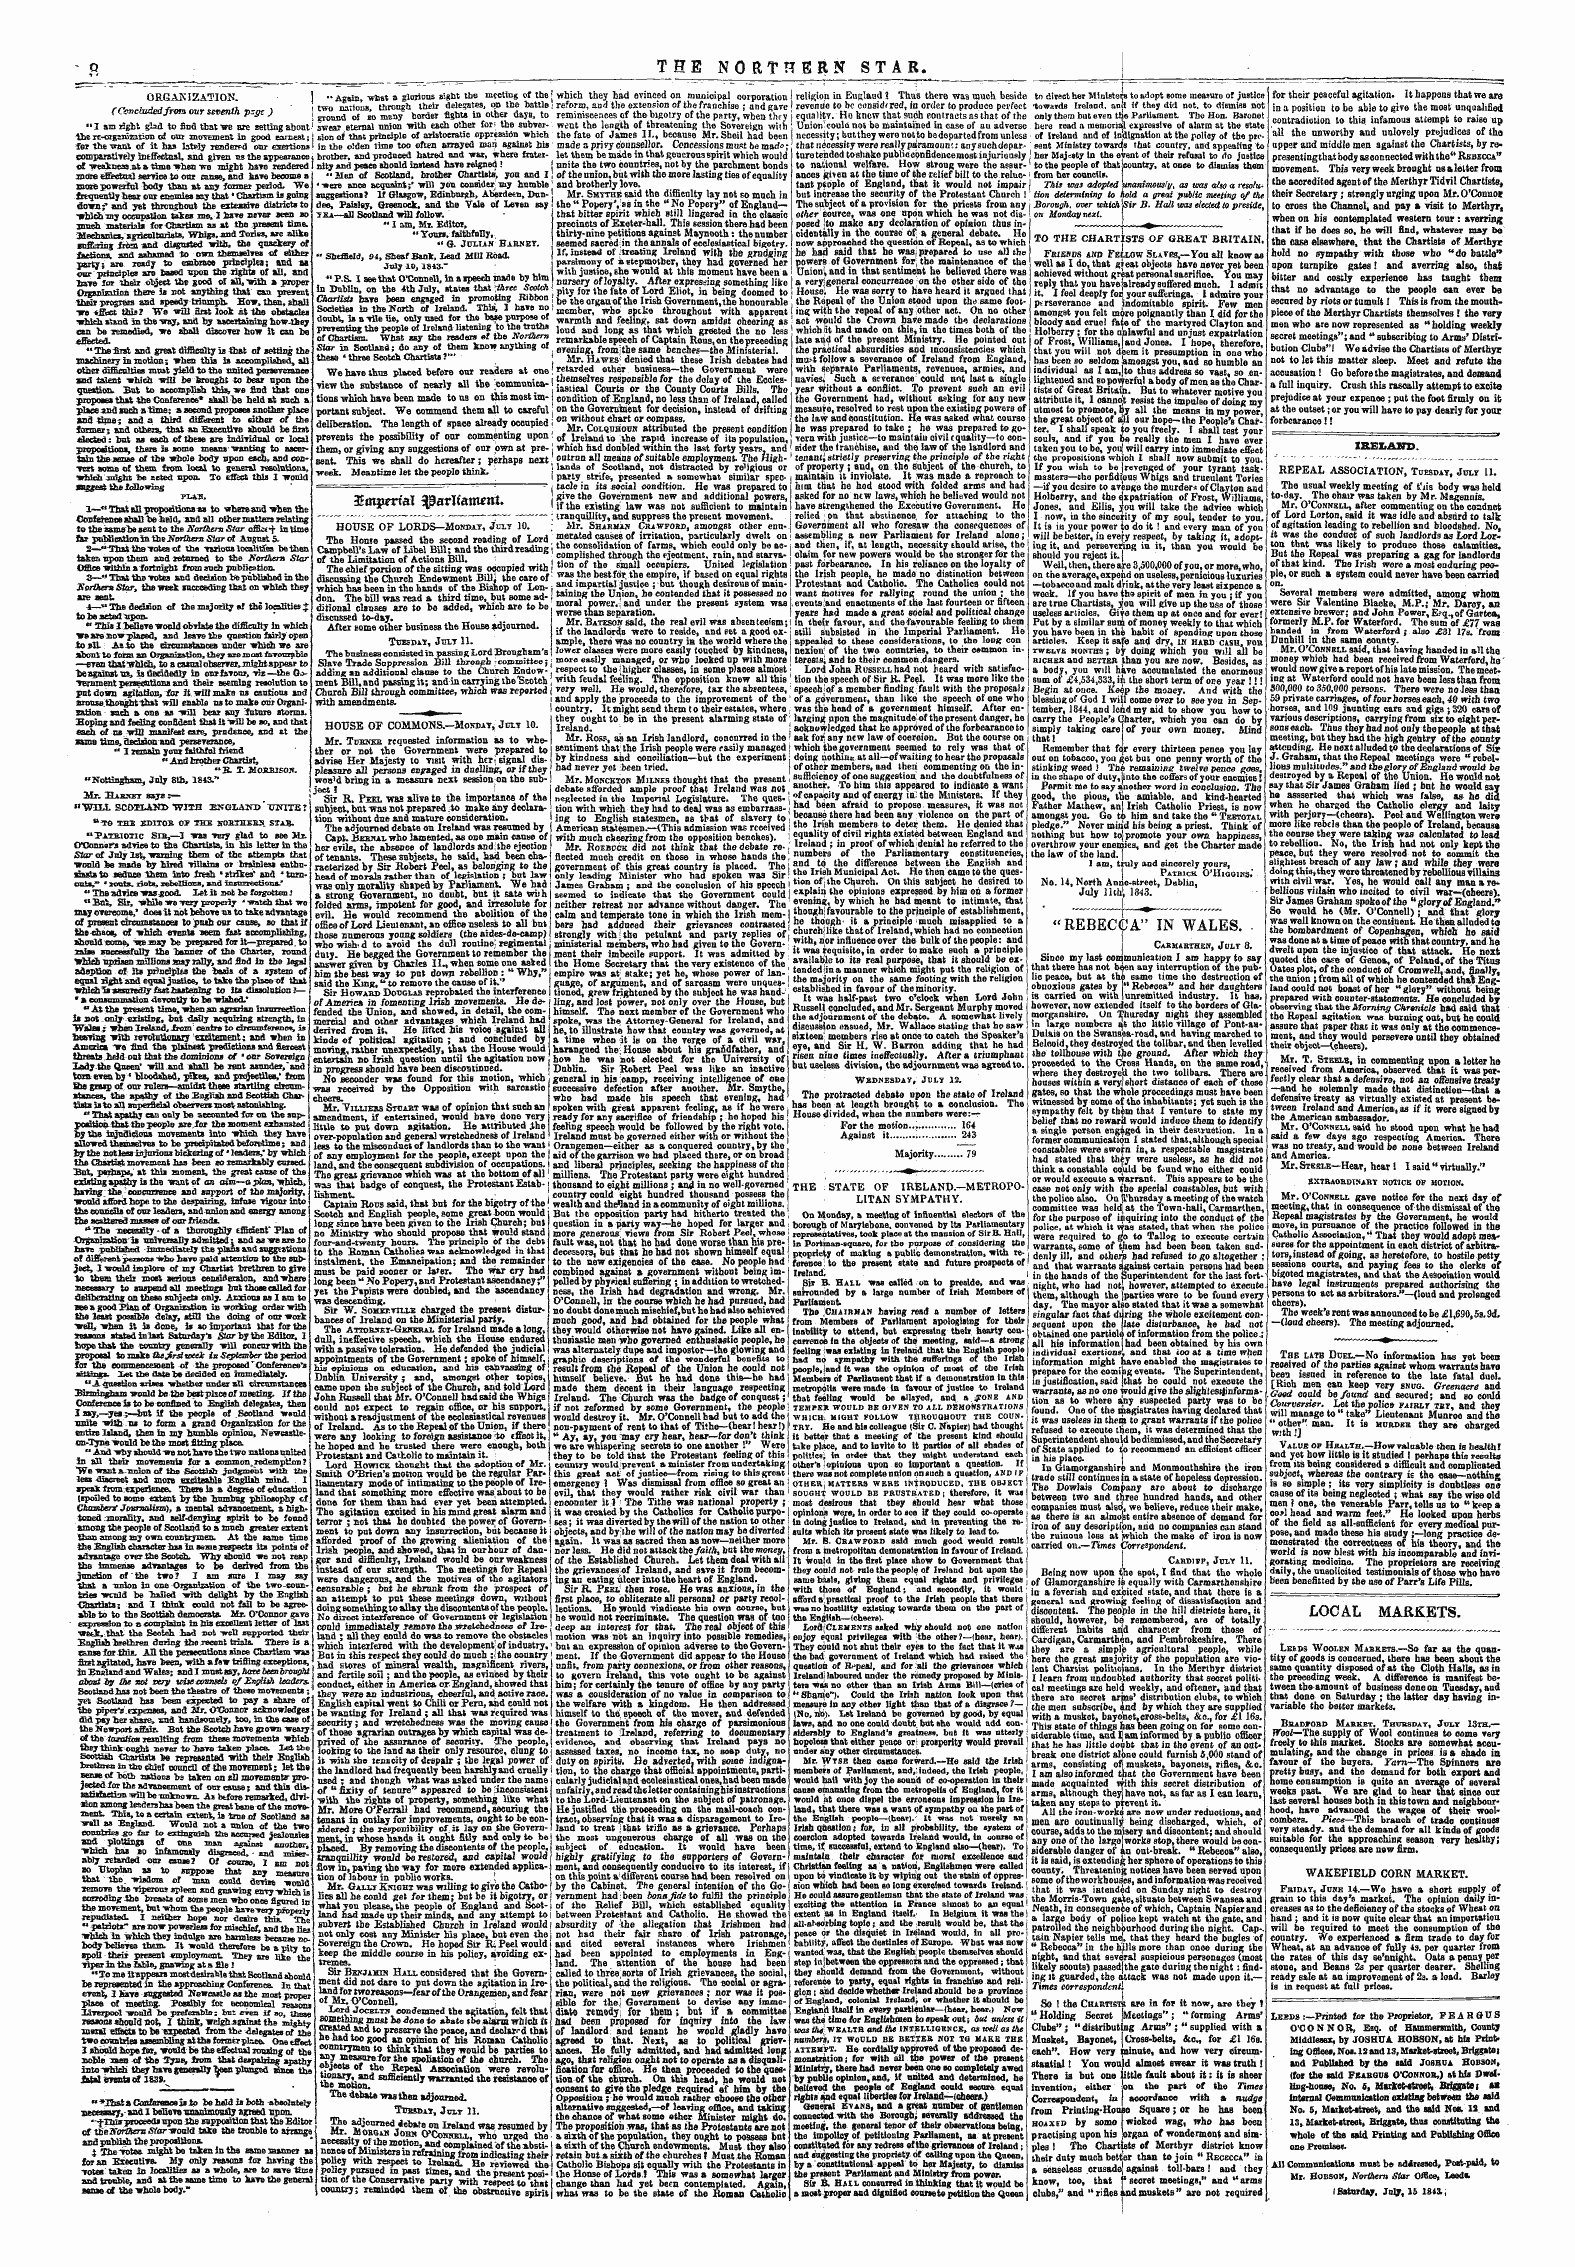 Northern Star (1837-1852): jS F Y, 2nd edition - Ireland.